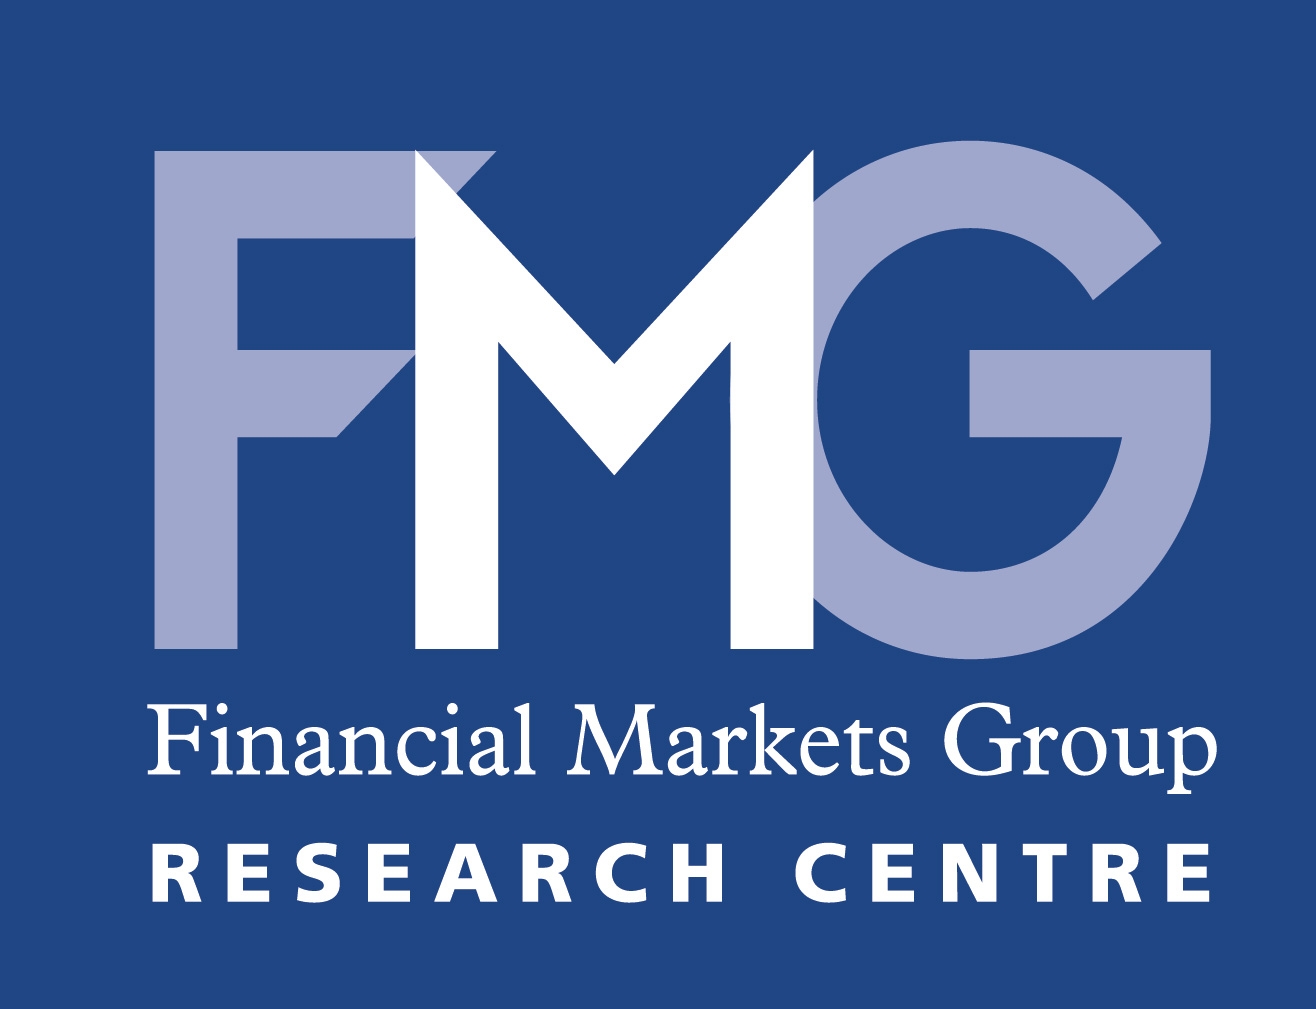 LSE's Financial Markets Group